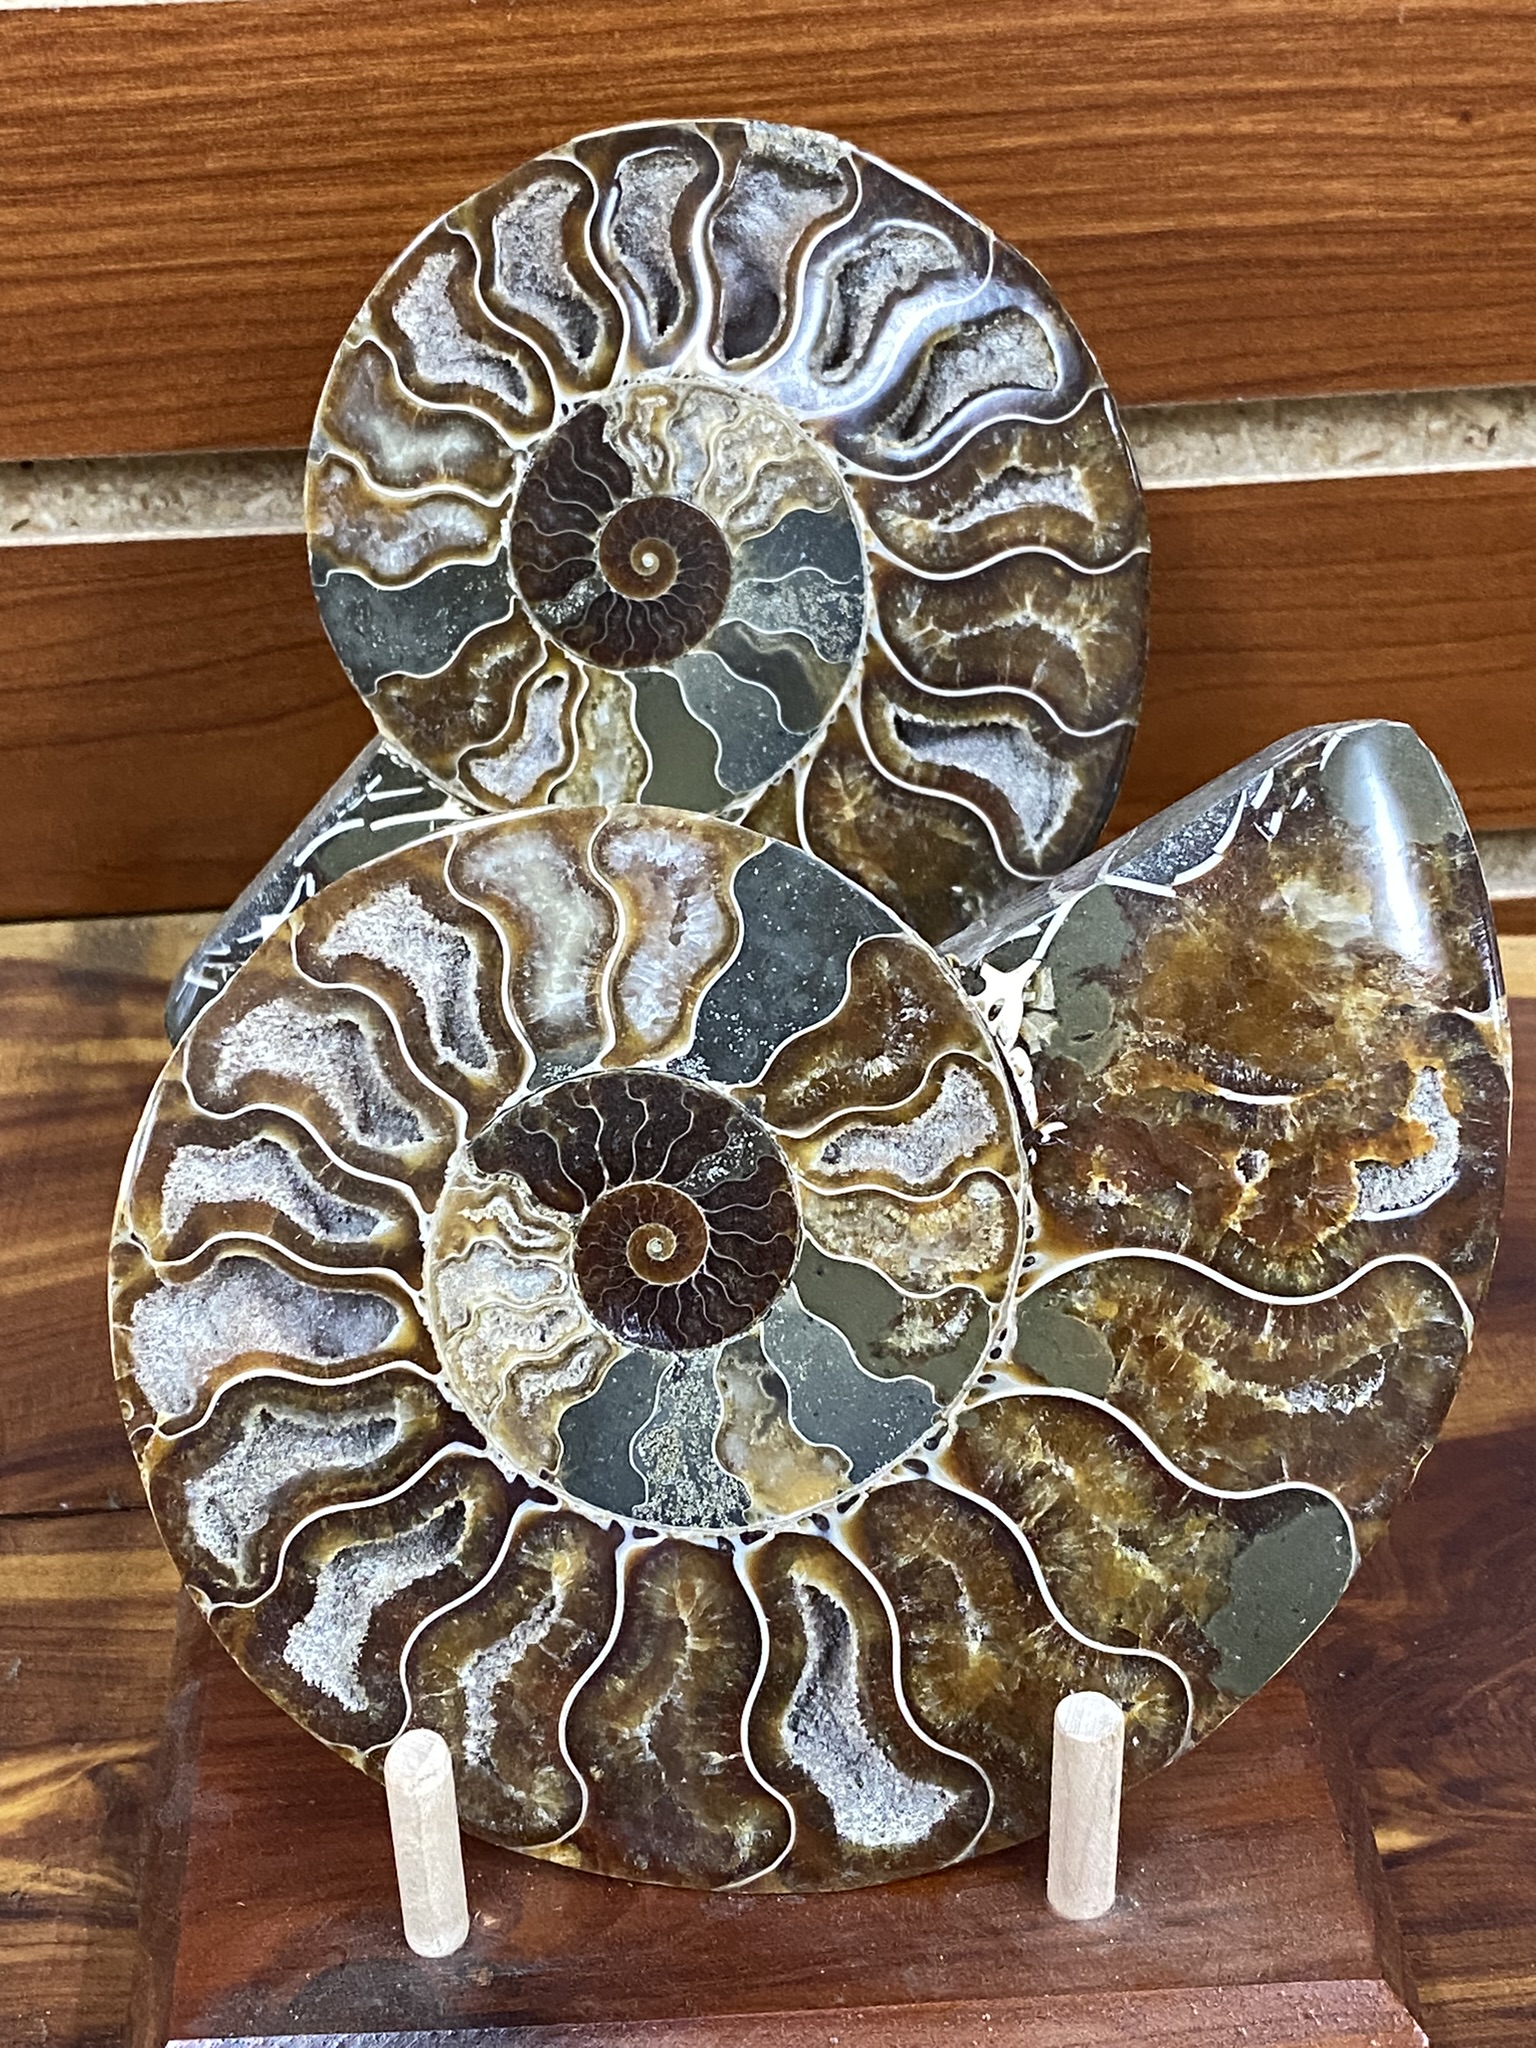 Ammonite halves